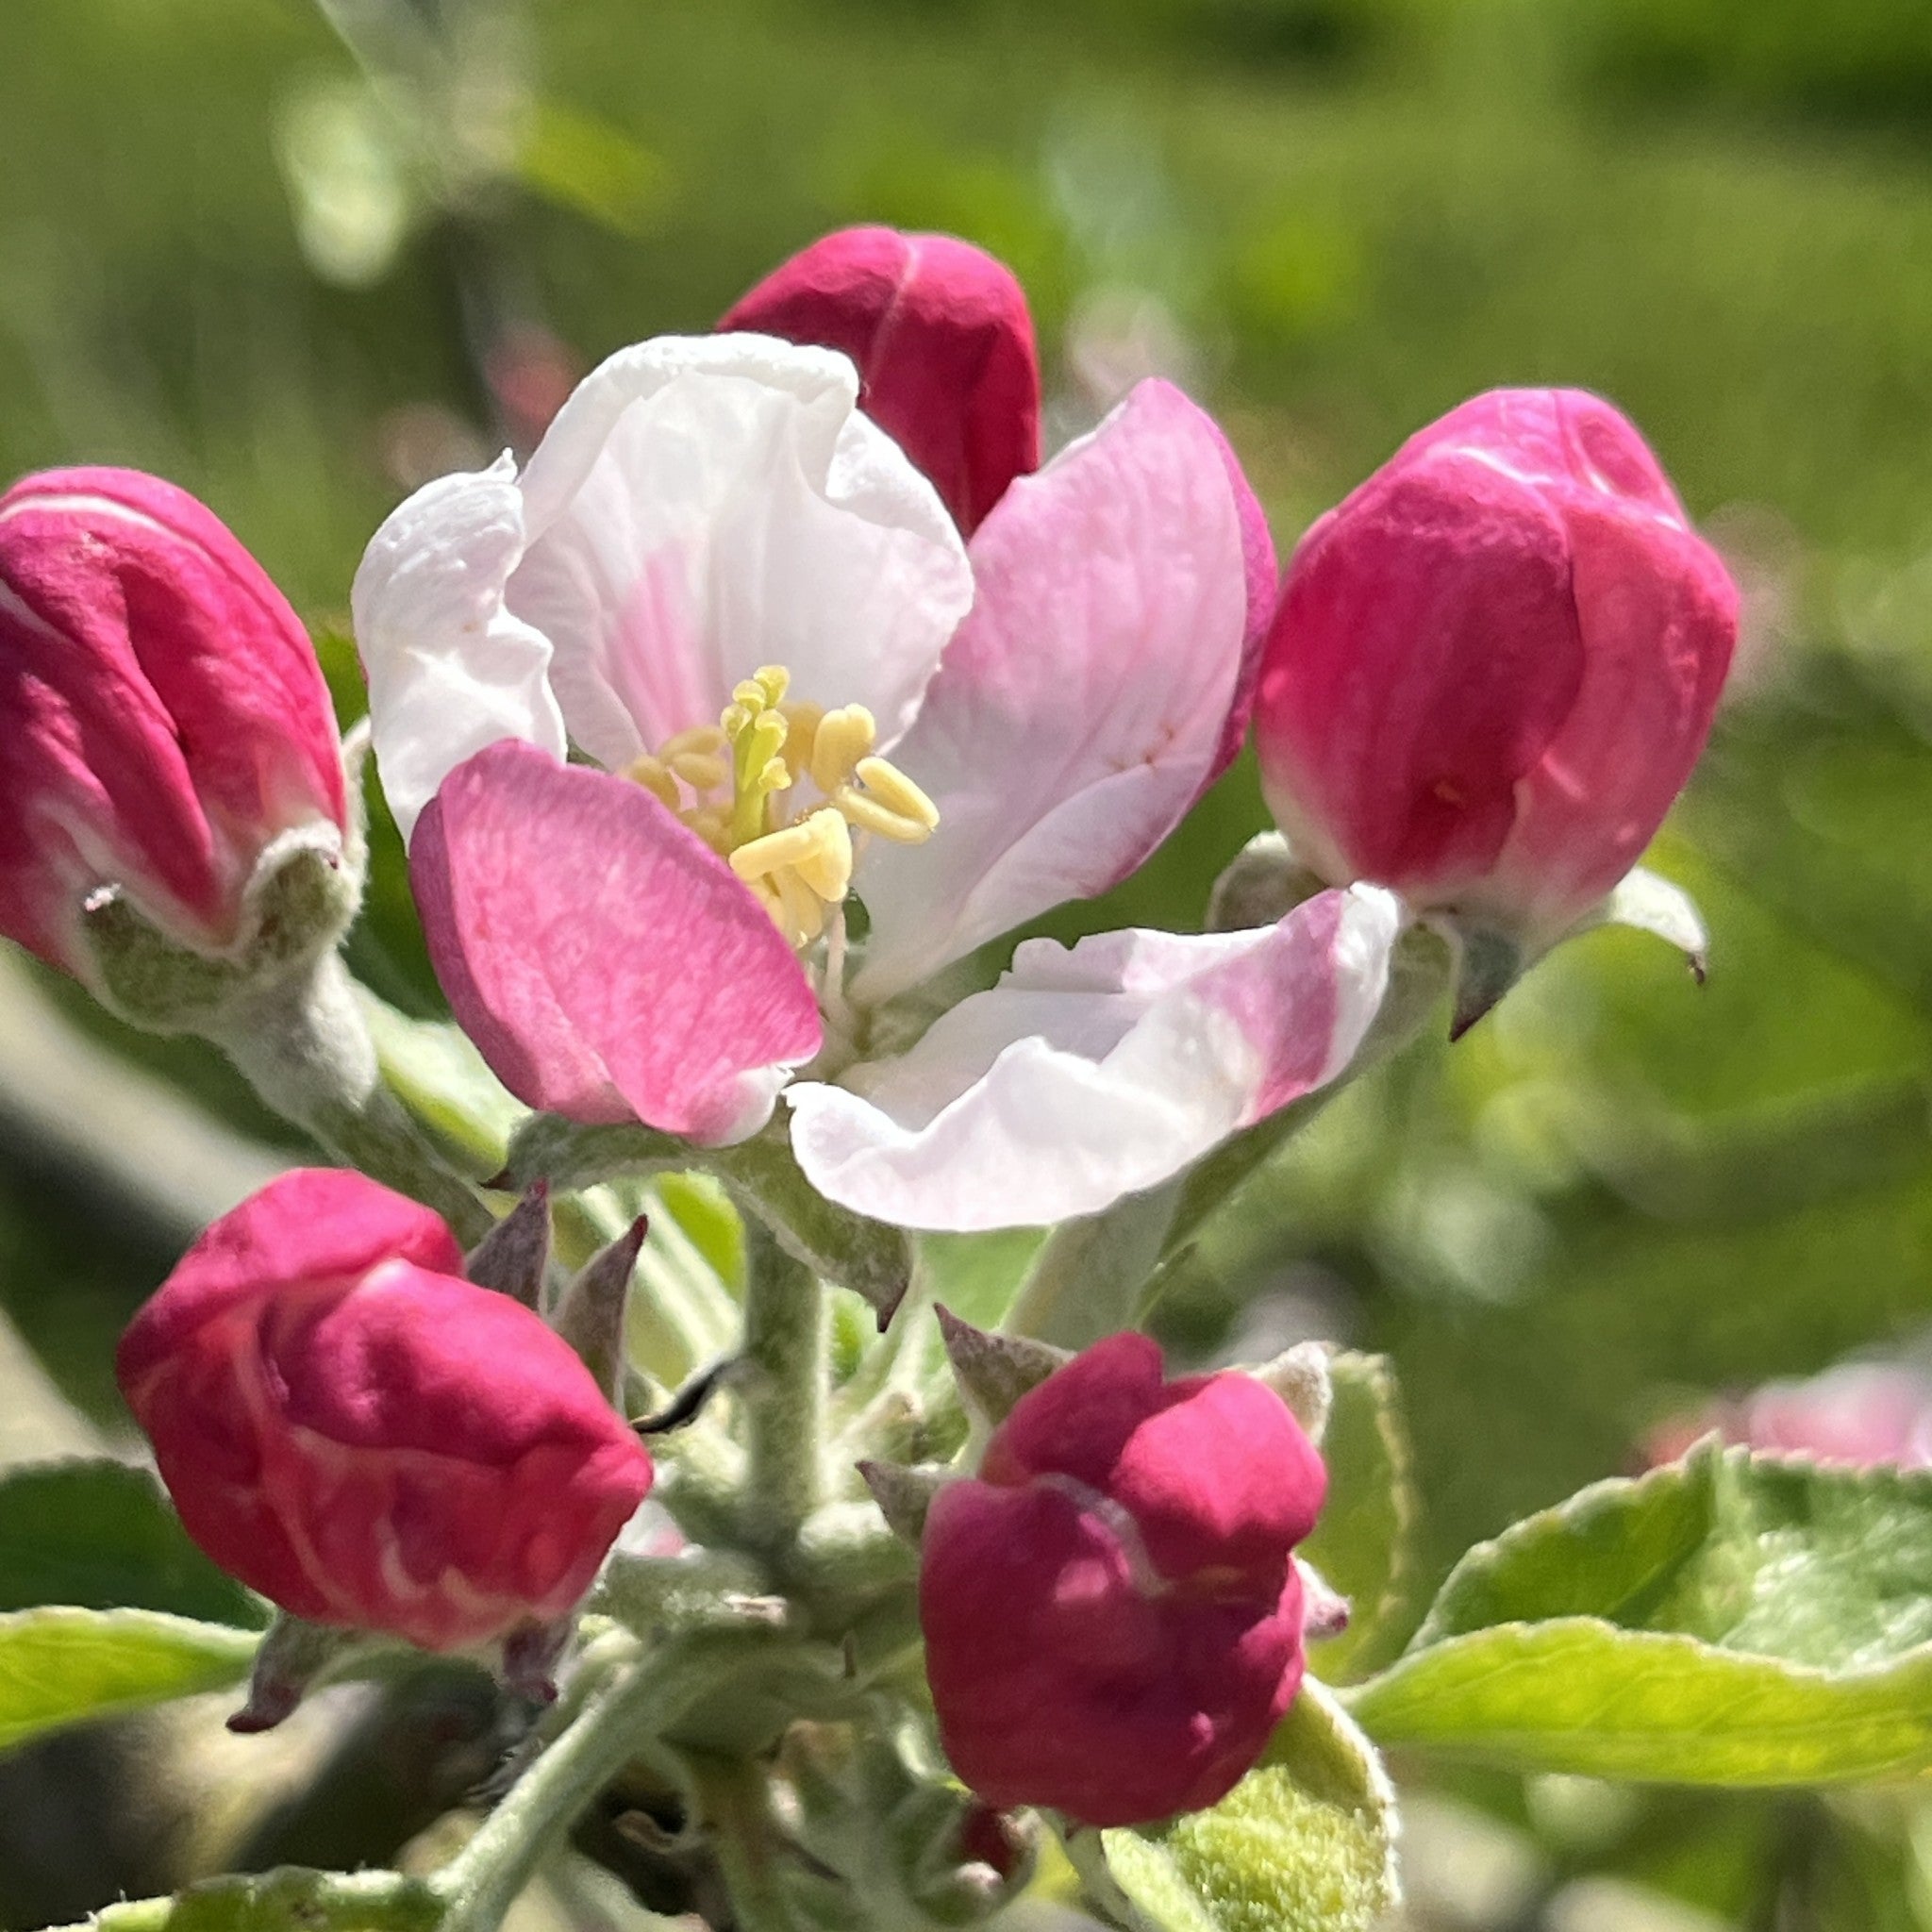 Lanes Prince Albert apple tree blossom